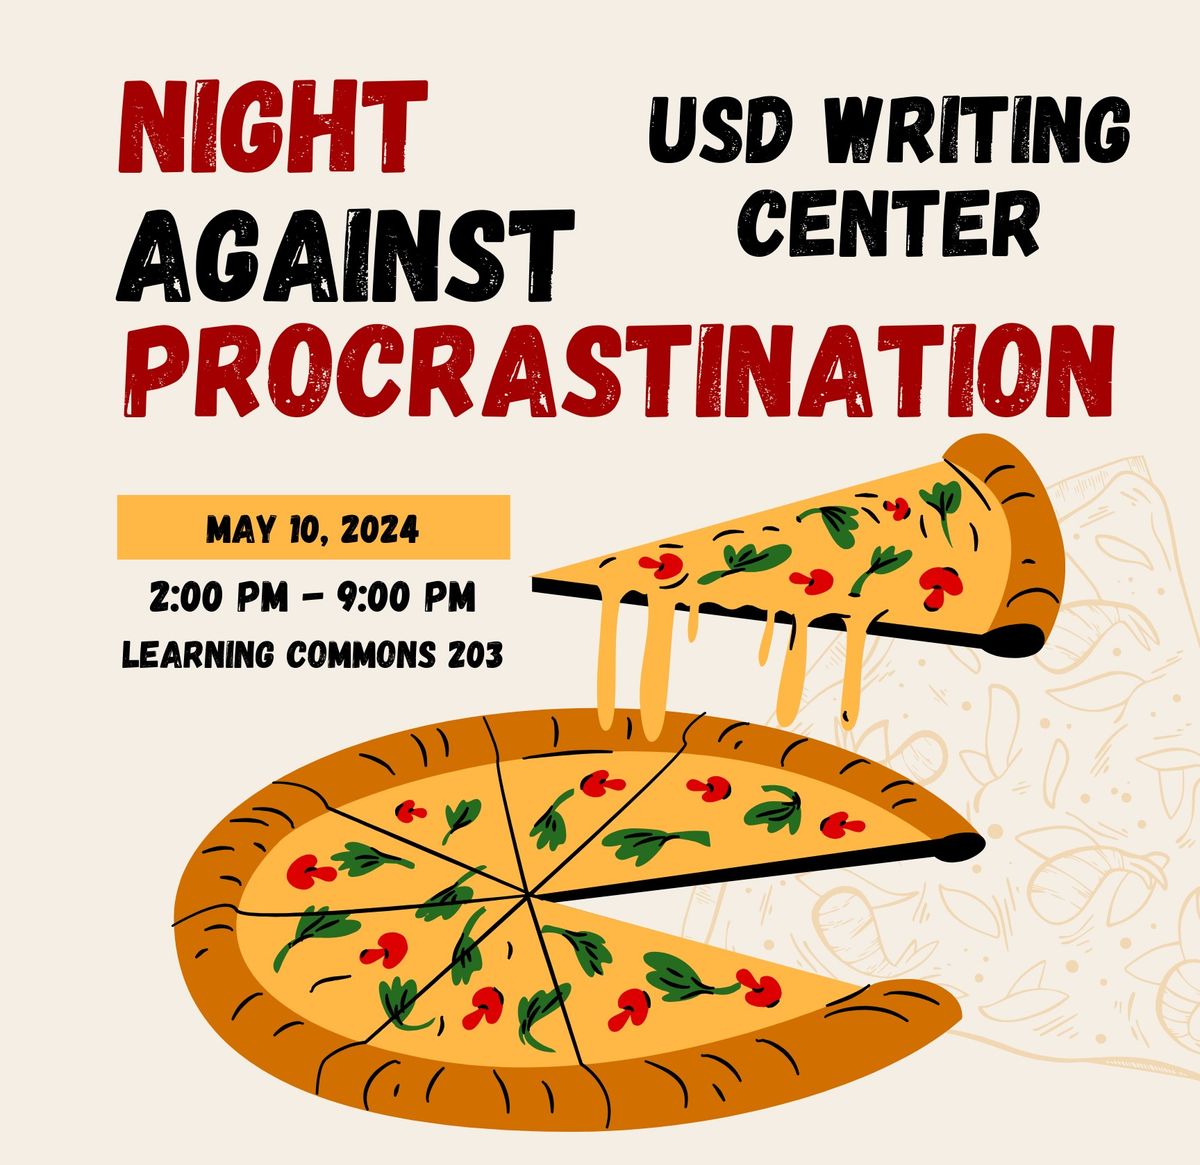 The Writing Center's Night Against Procrastination